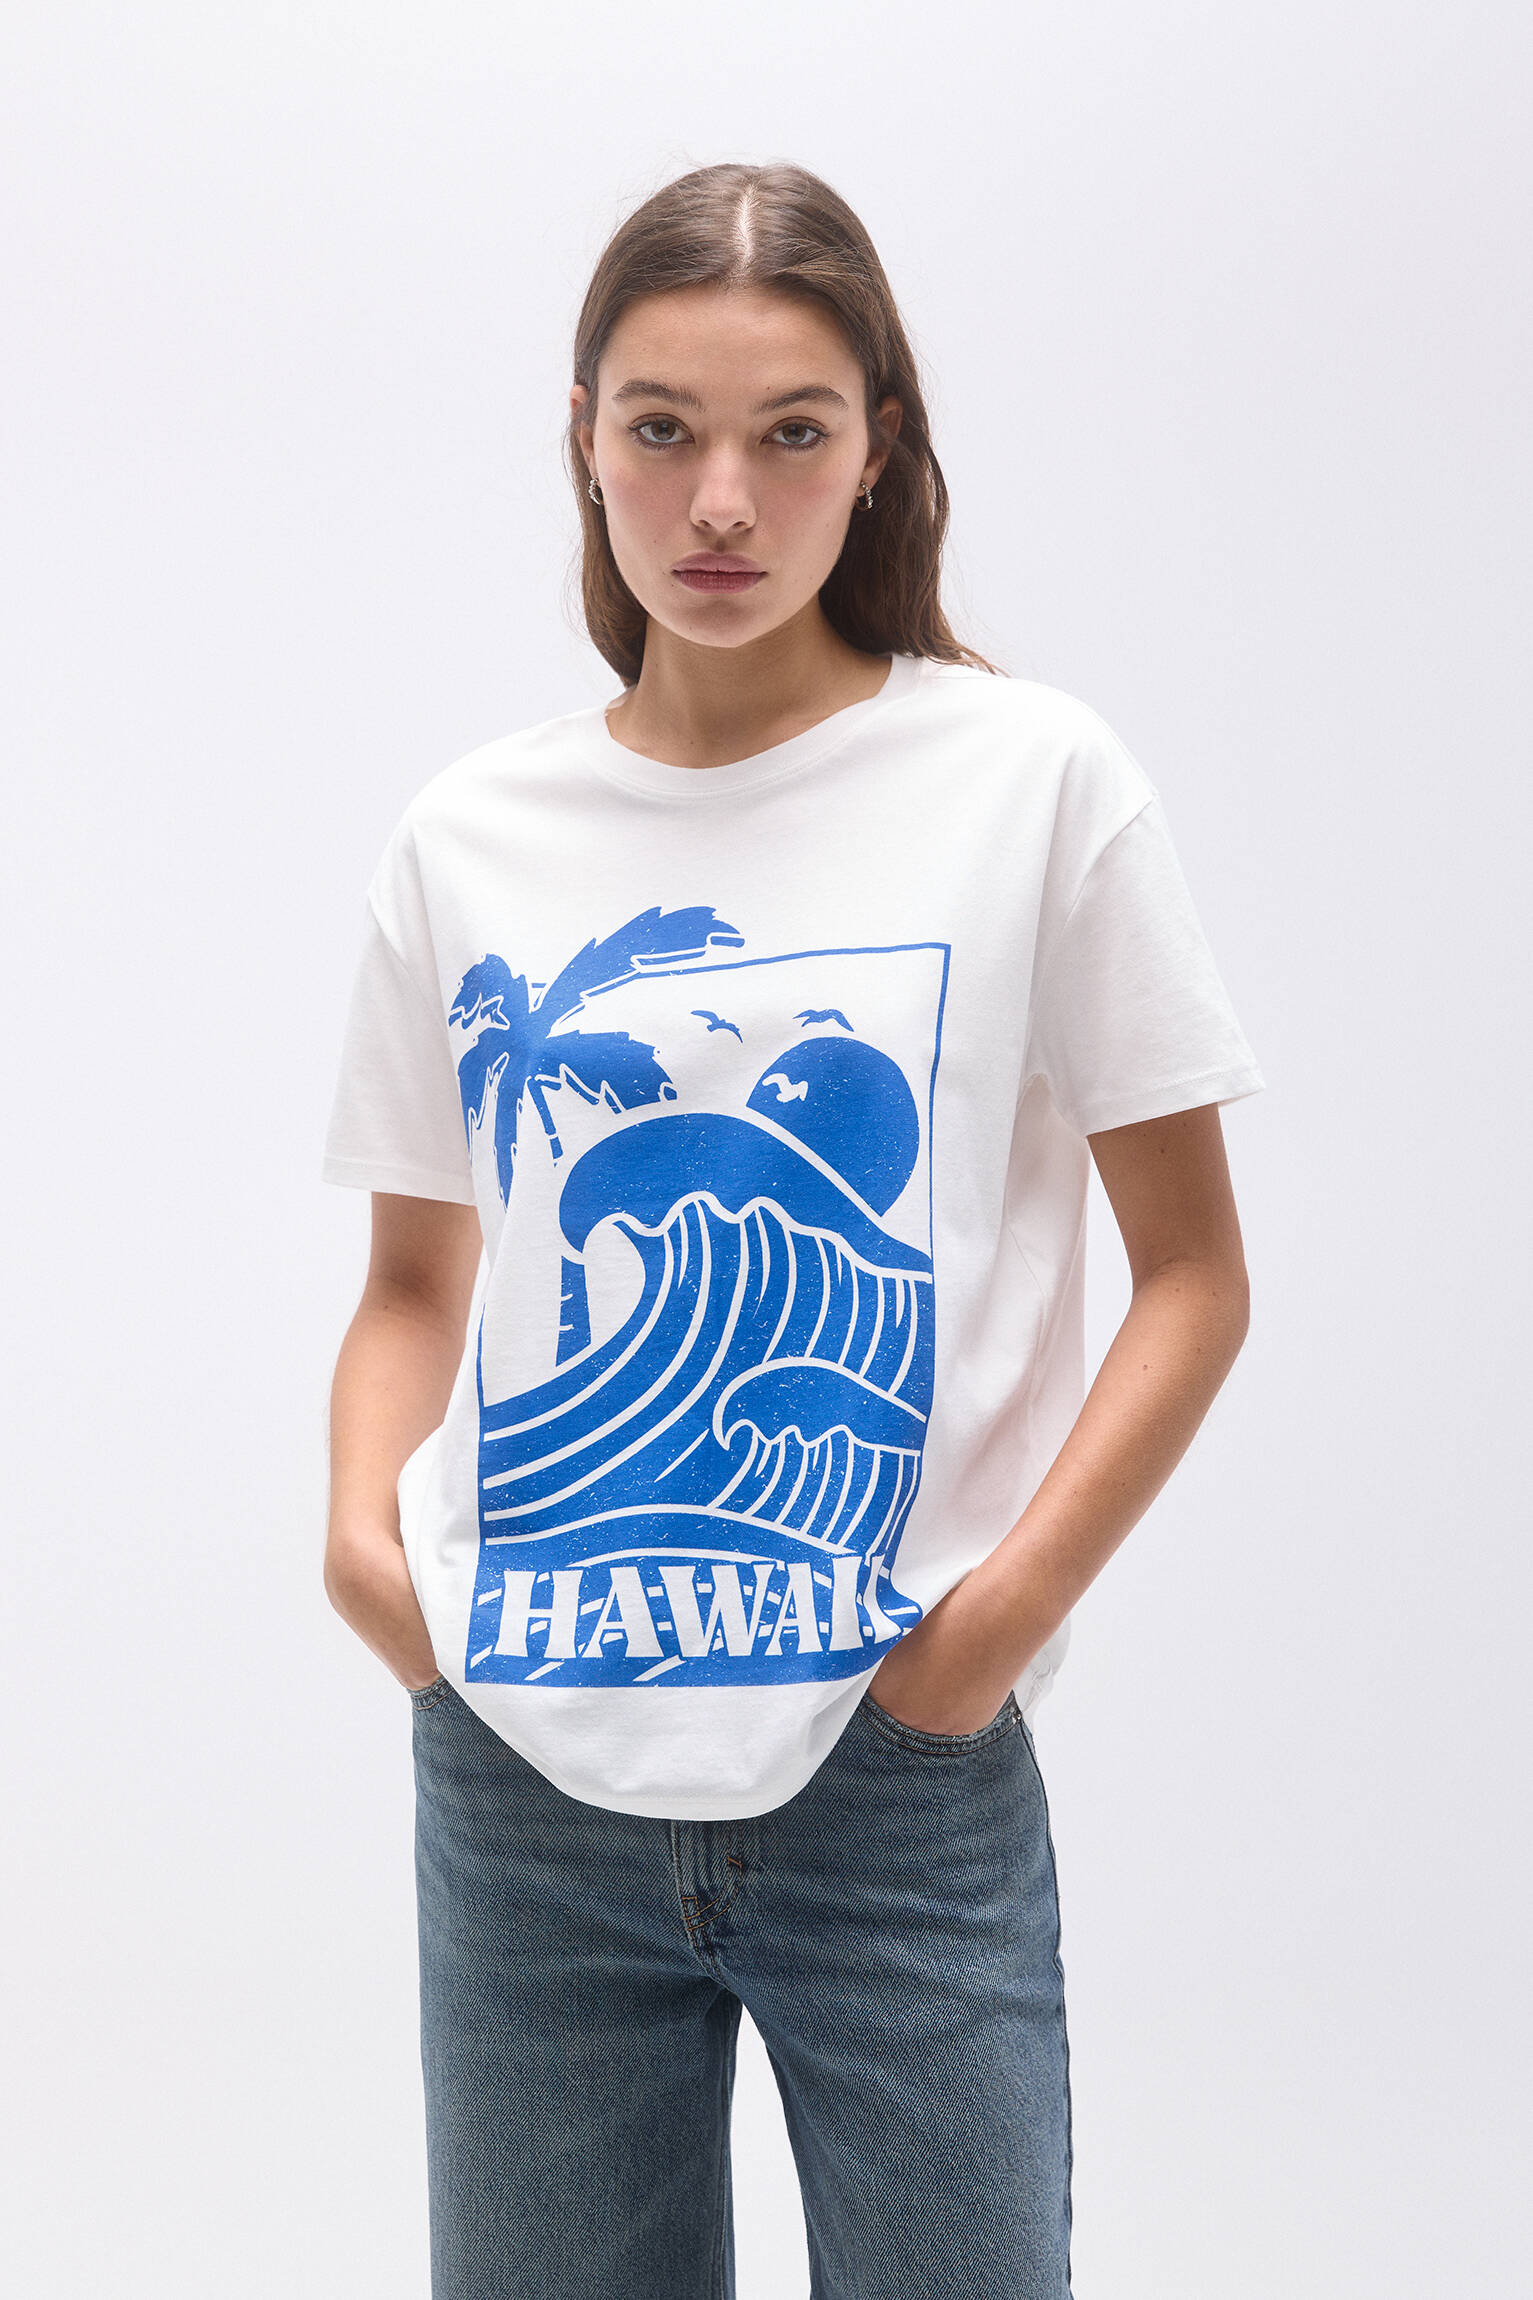 Hawaii graphic T-shirt - pullu0026bear